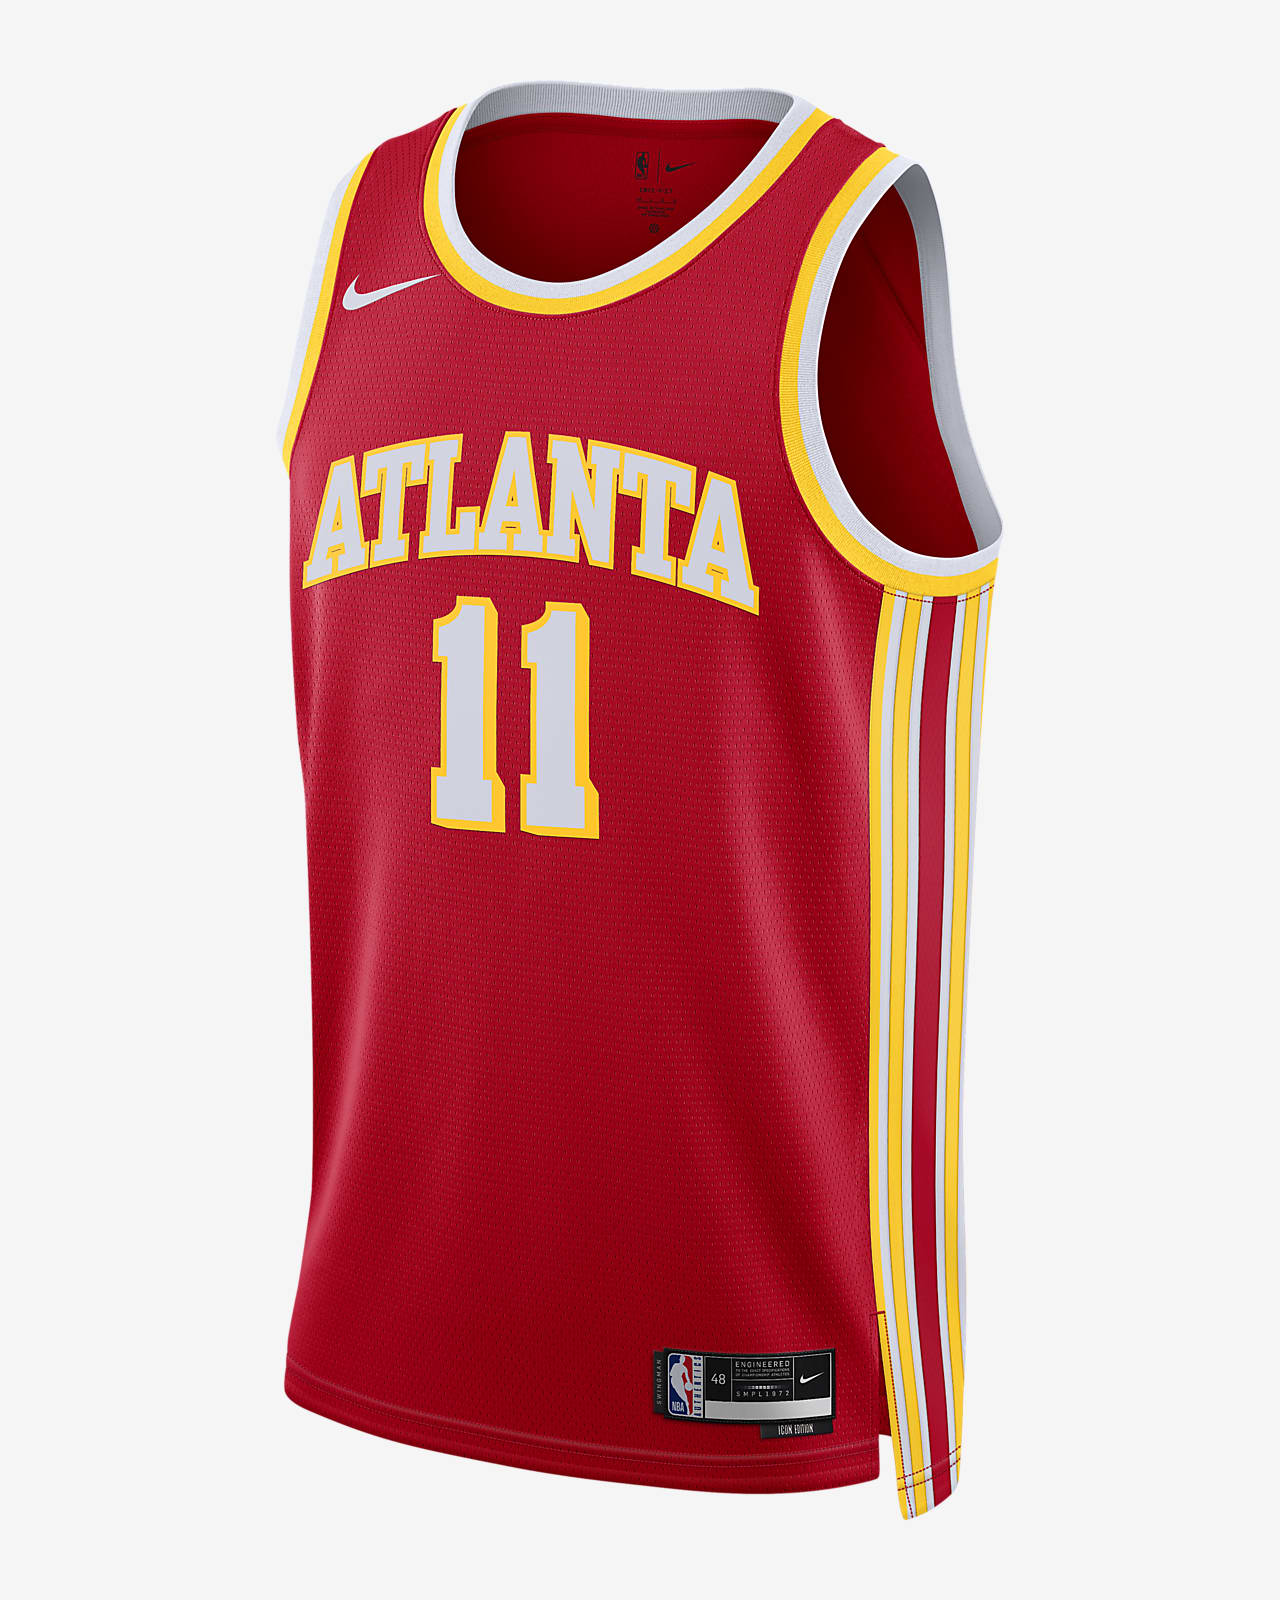 2022/23 赛季亚特兰大老鹰队 Icon Edition Nike Dri-FIT NBA Swingman Jersey 男子球衣